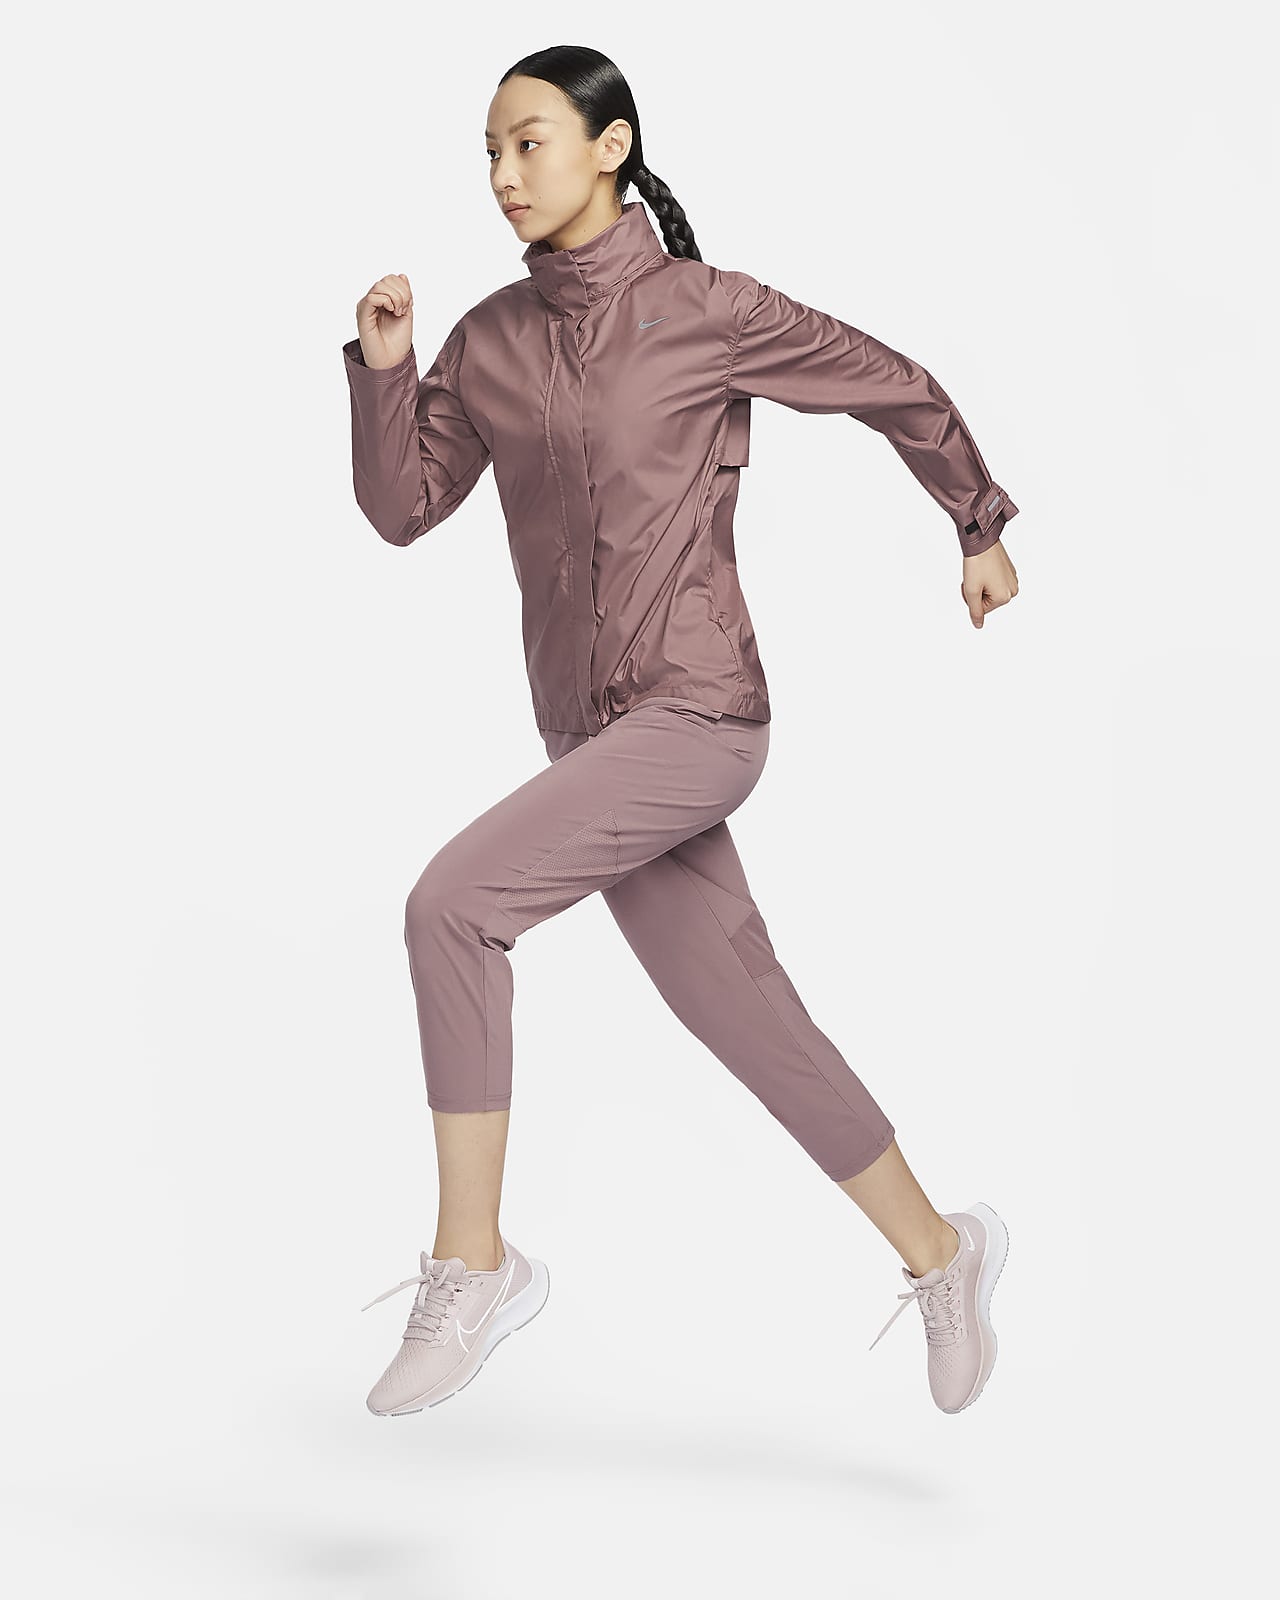 Nike Dri-FIT Fast Women's Mid-Rise 7/8 Running Trousers